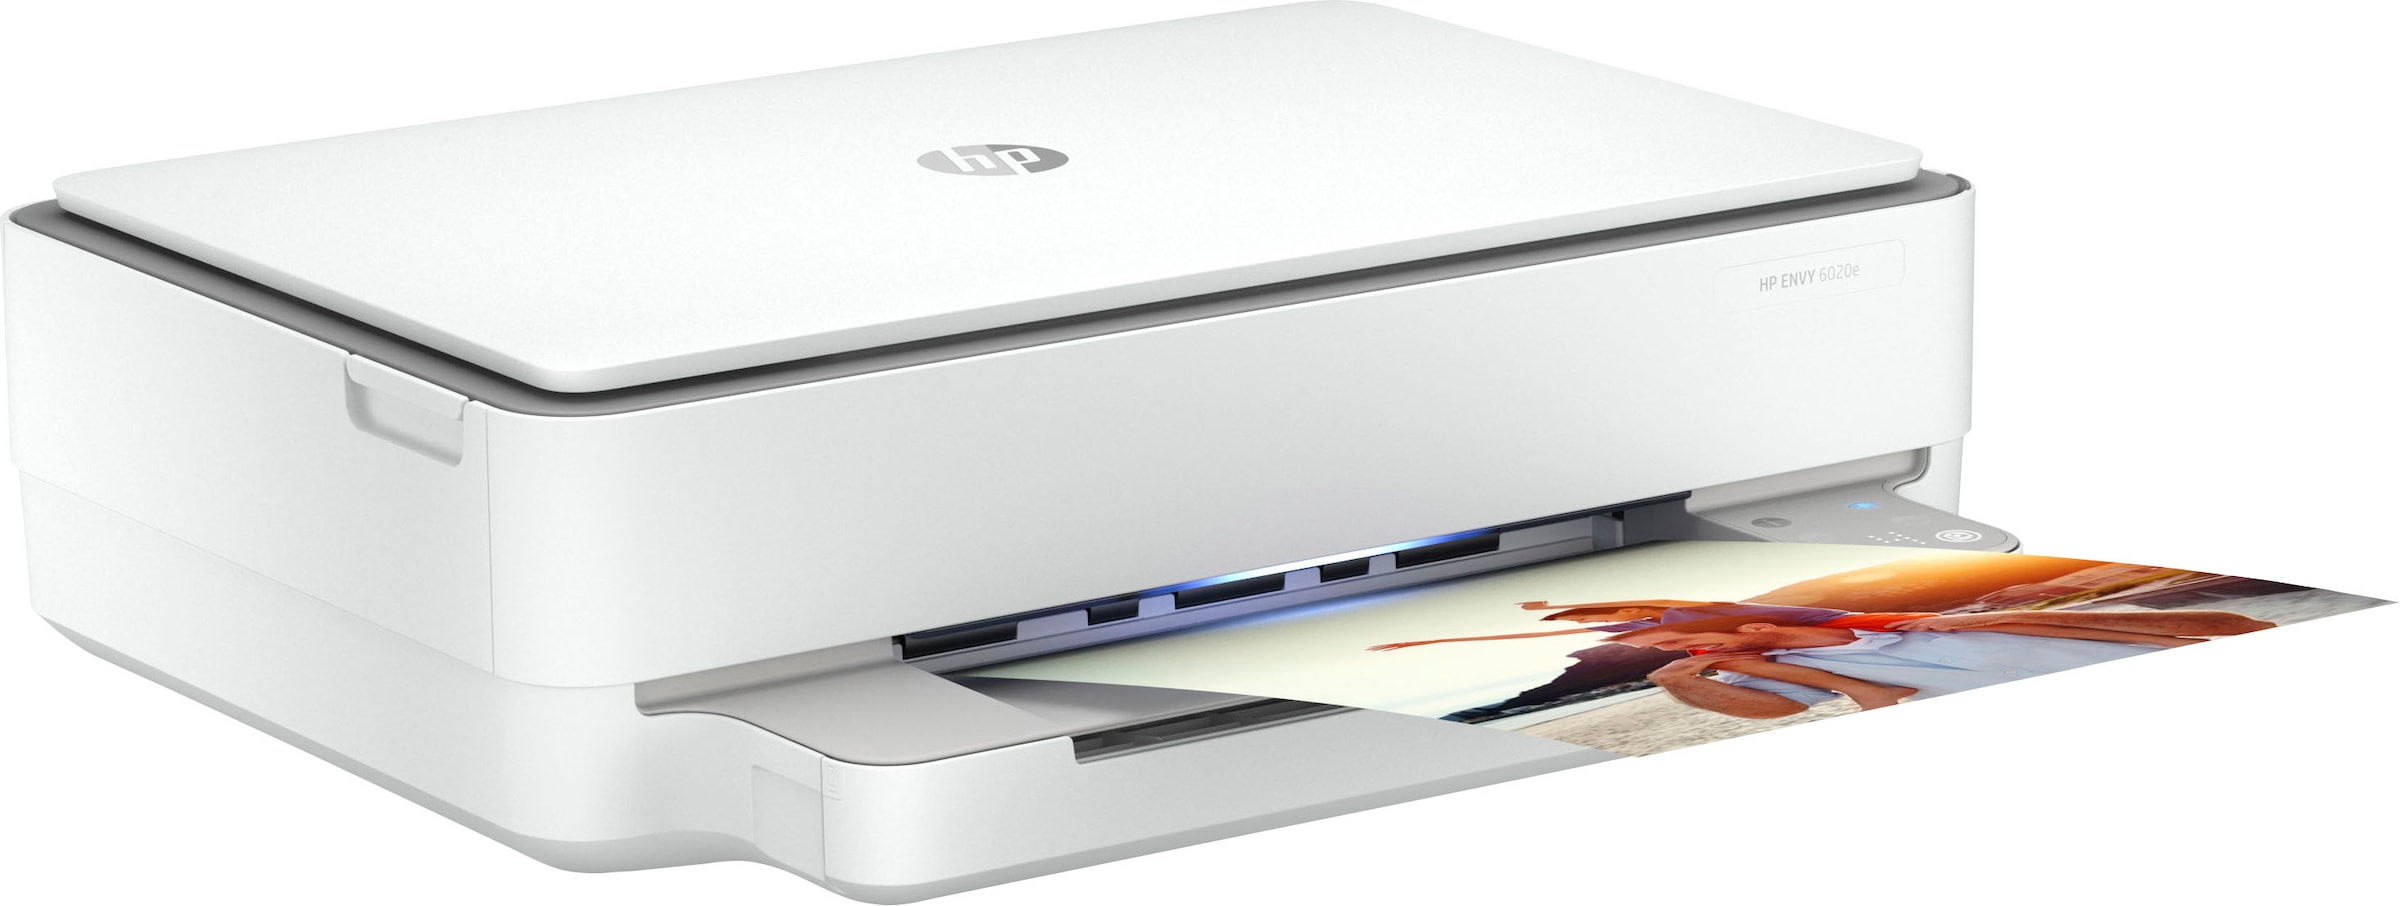 HP Multifunktionsdrucker »ENVY 6020e«, 3 Monate gratis Drucken mit HP Instant Ink inklusive